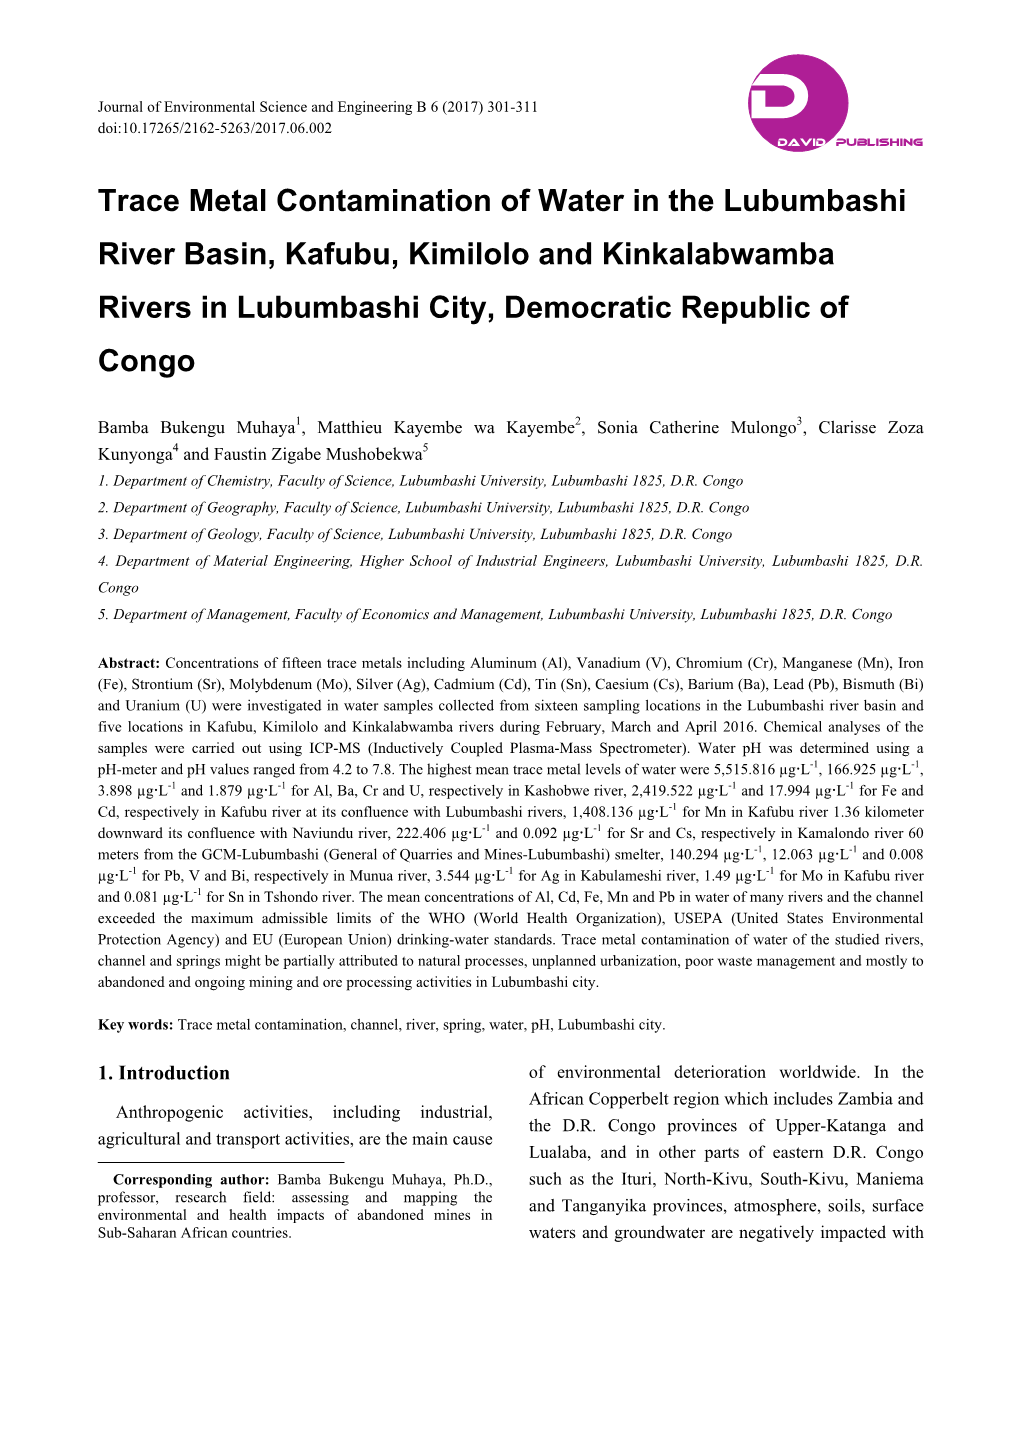 Trace Metal Contamination of Water in the Lubumbashi River Basin, Kafubu, Kimilolo and Kinkalabwamba Rivers in Lubumbashi City, Democratic Republic of Congo